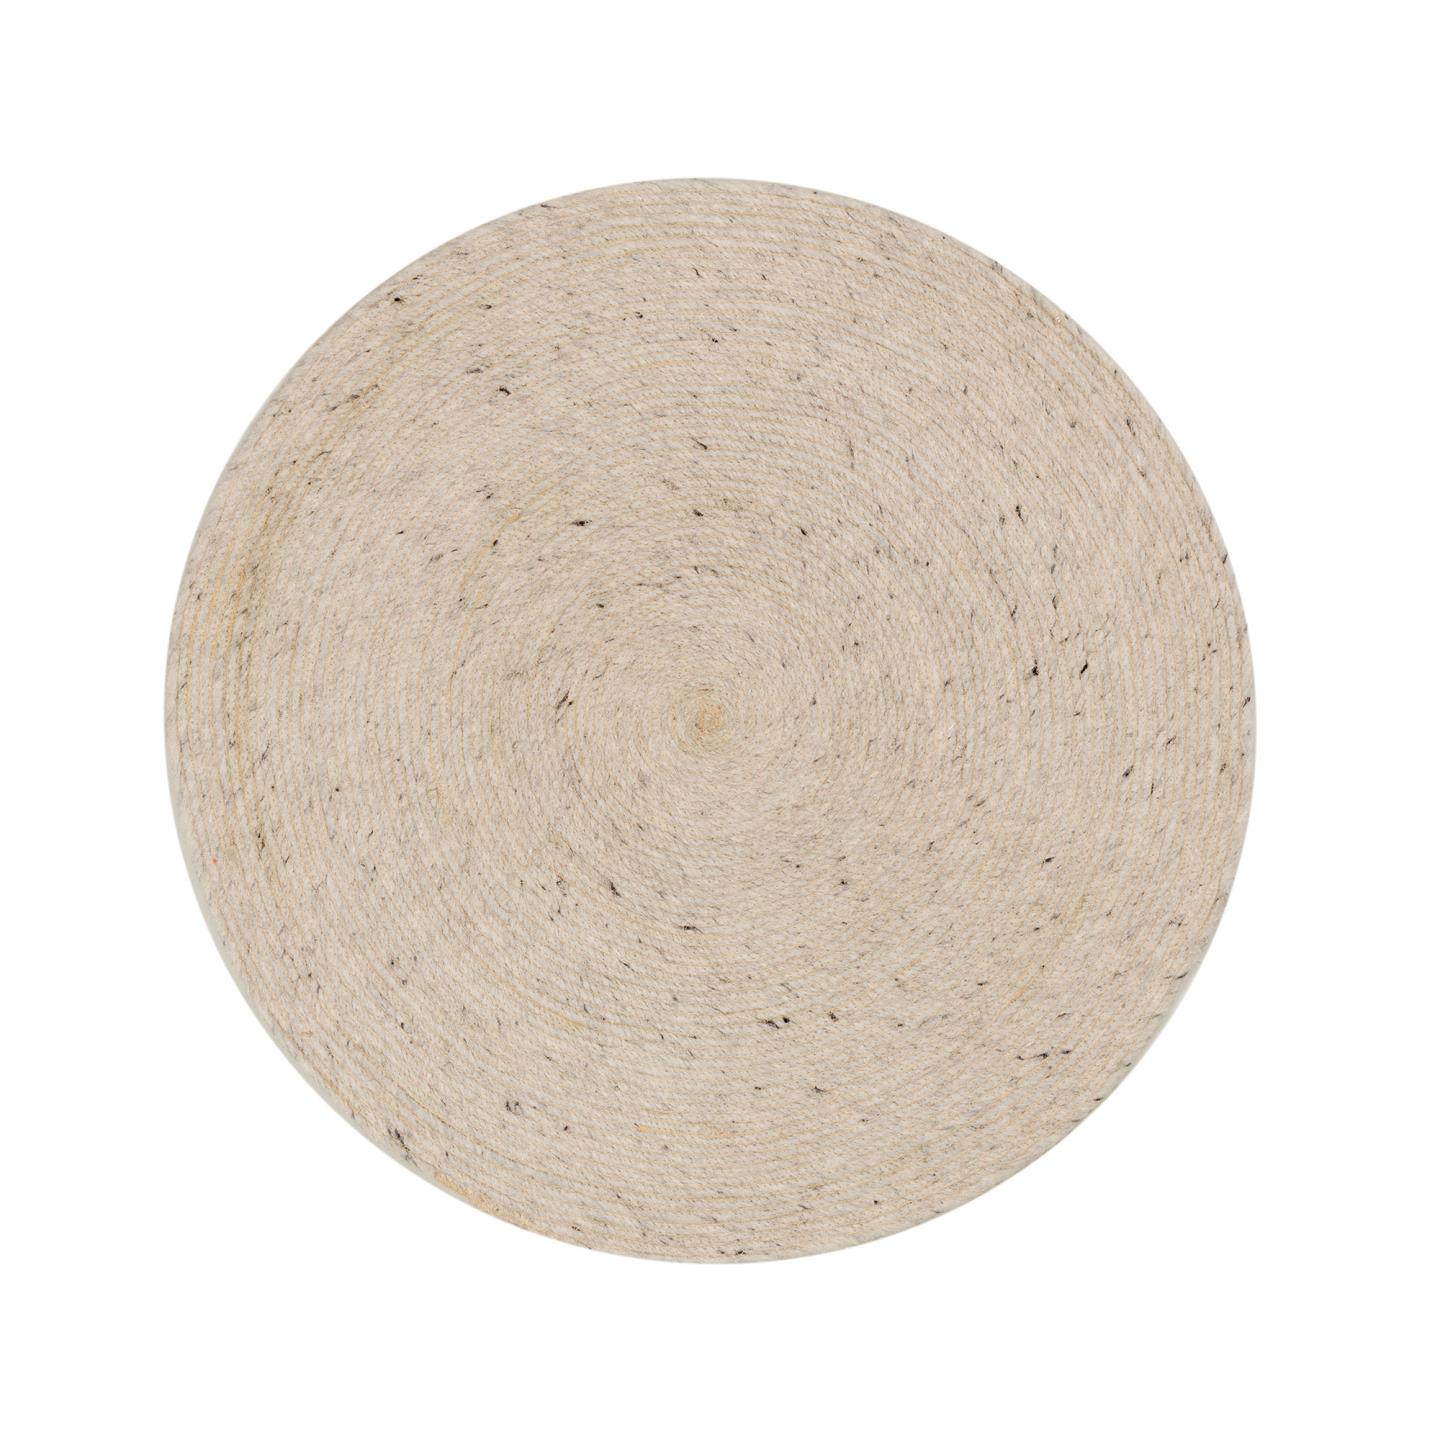 LAFORMA Takashi gulvtæppe, rund - grå uld (Ø150)